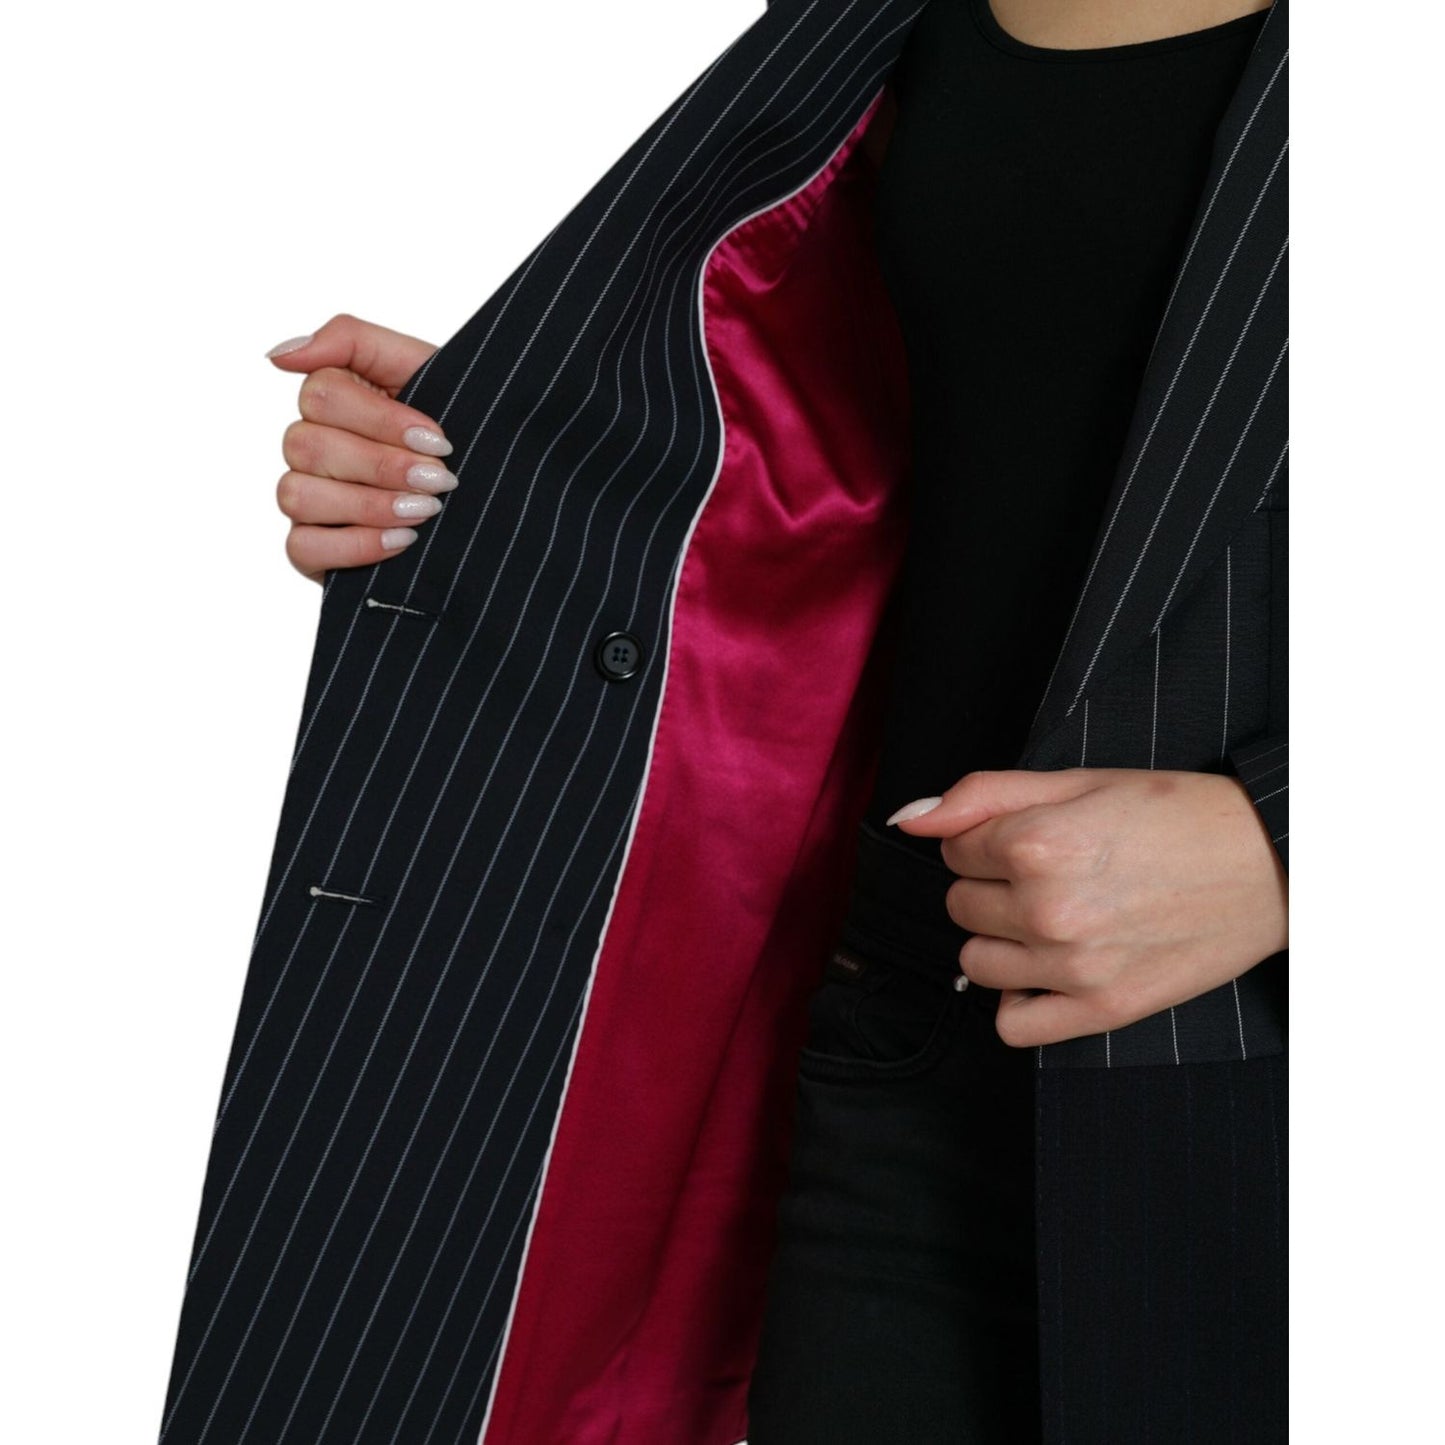 Dolce & Gabbana Elegant Striped Virgin Wool Blazer black-striped-wool-doublebreasted-coat-jacket-1